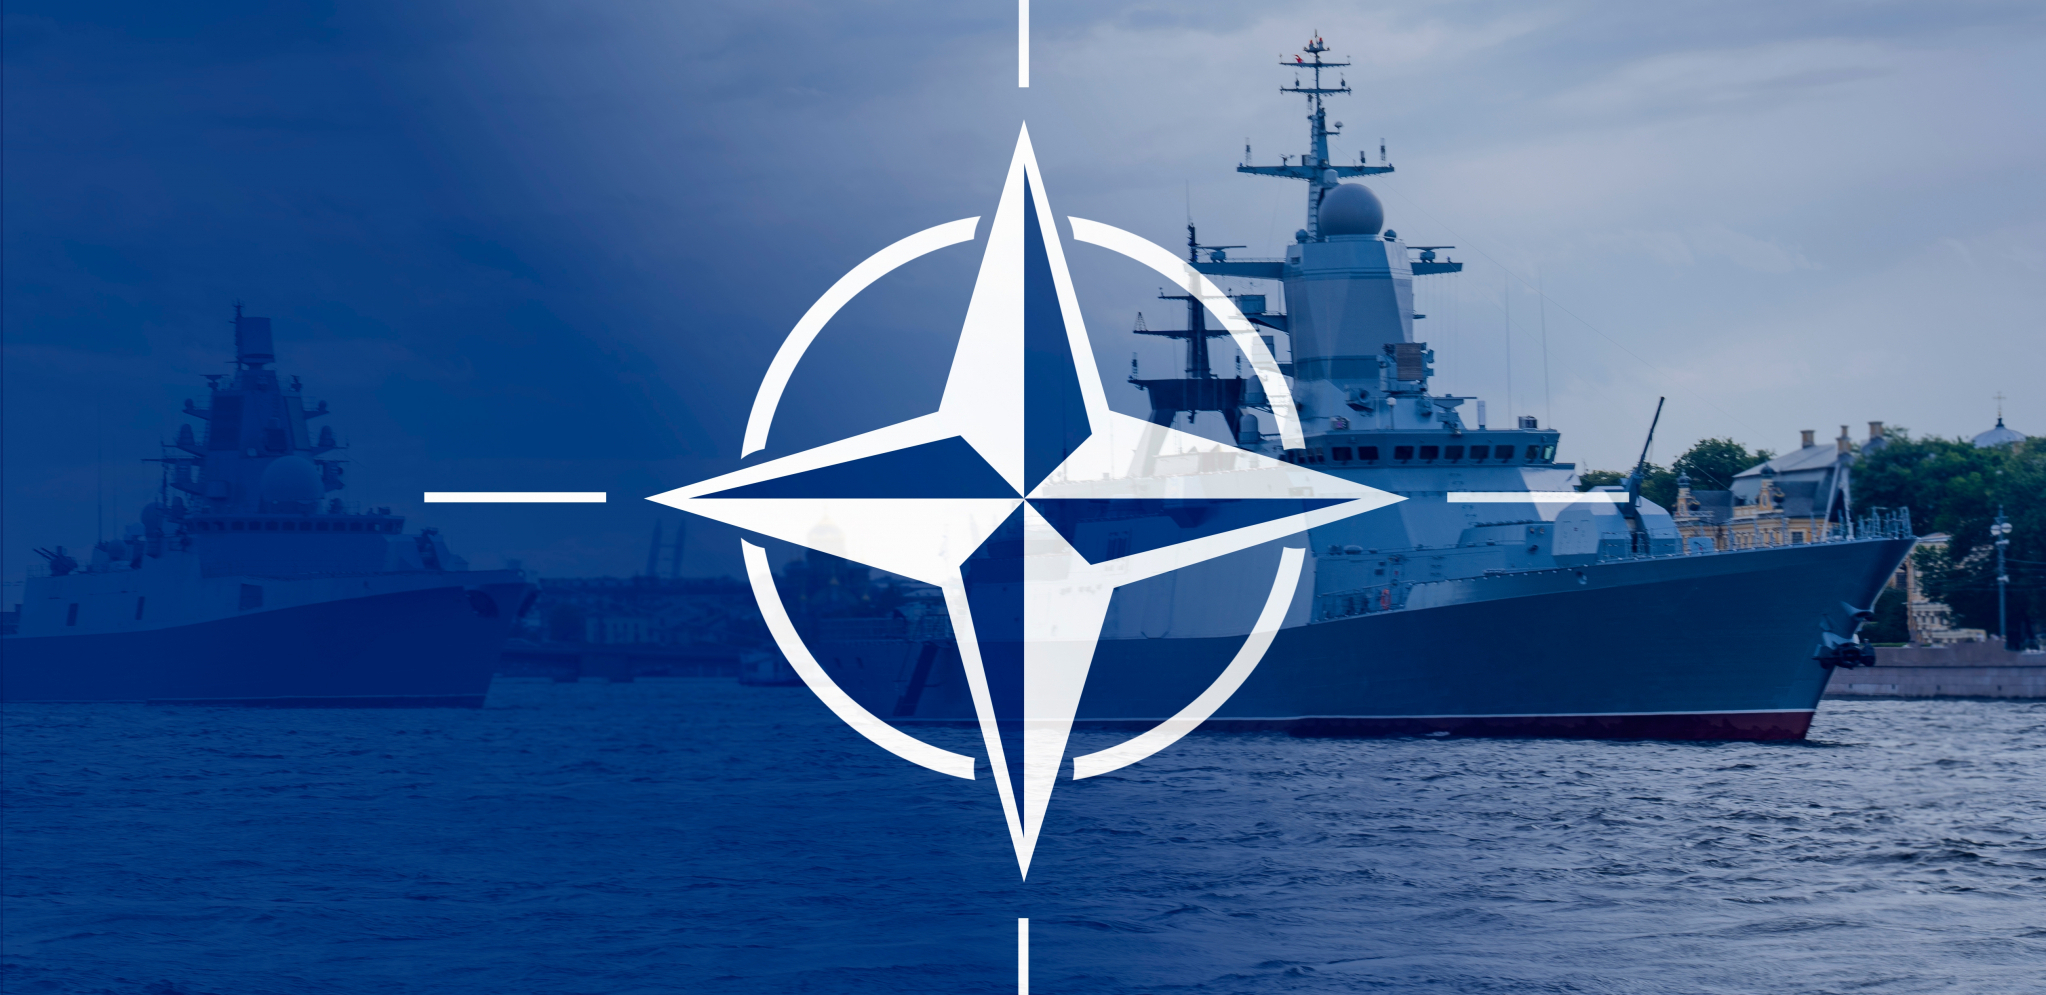 HITNO PROŠIRENJE NATO PAKTA Dve nove članice čekaju poslednje sporazume